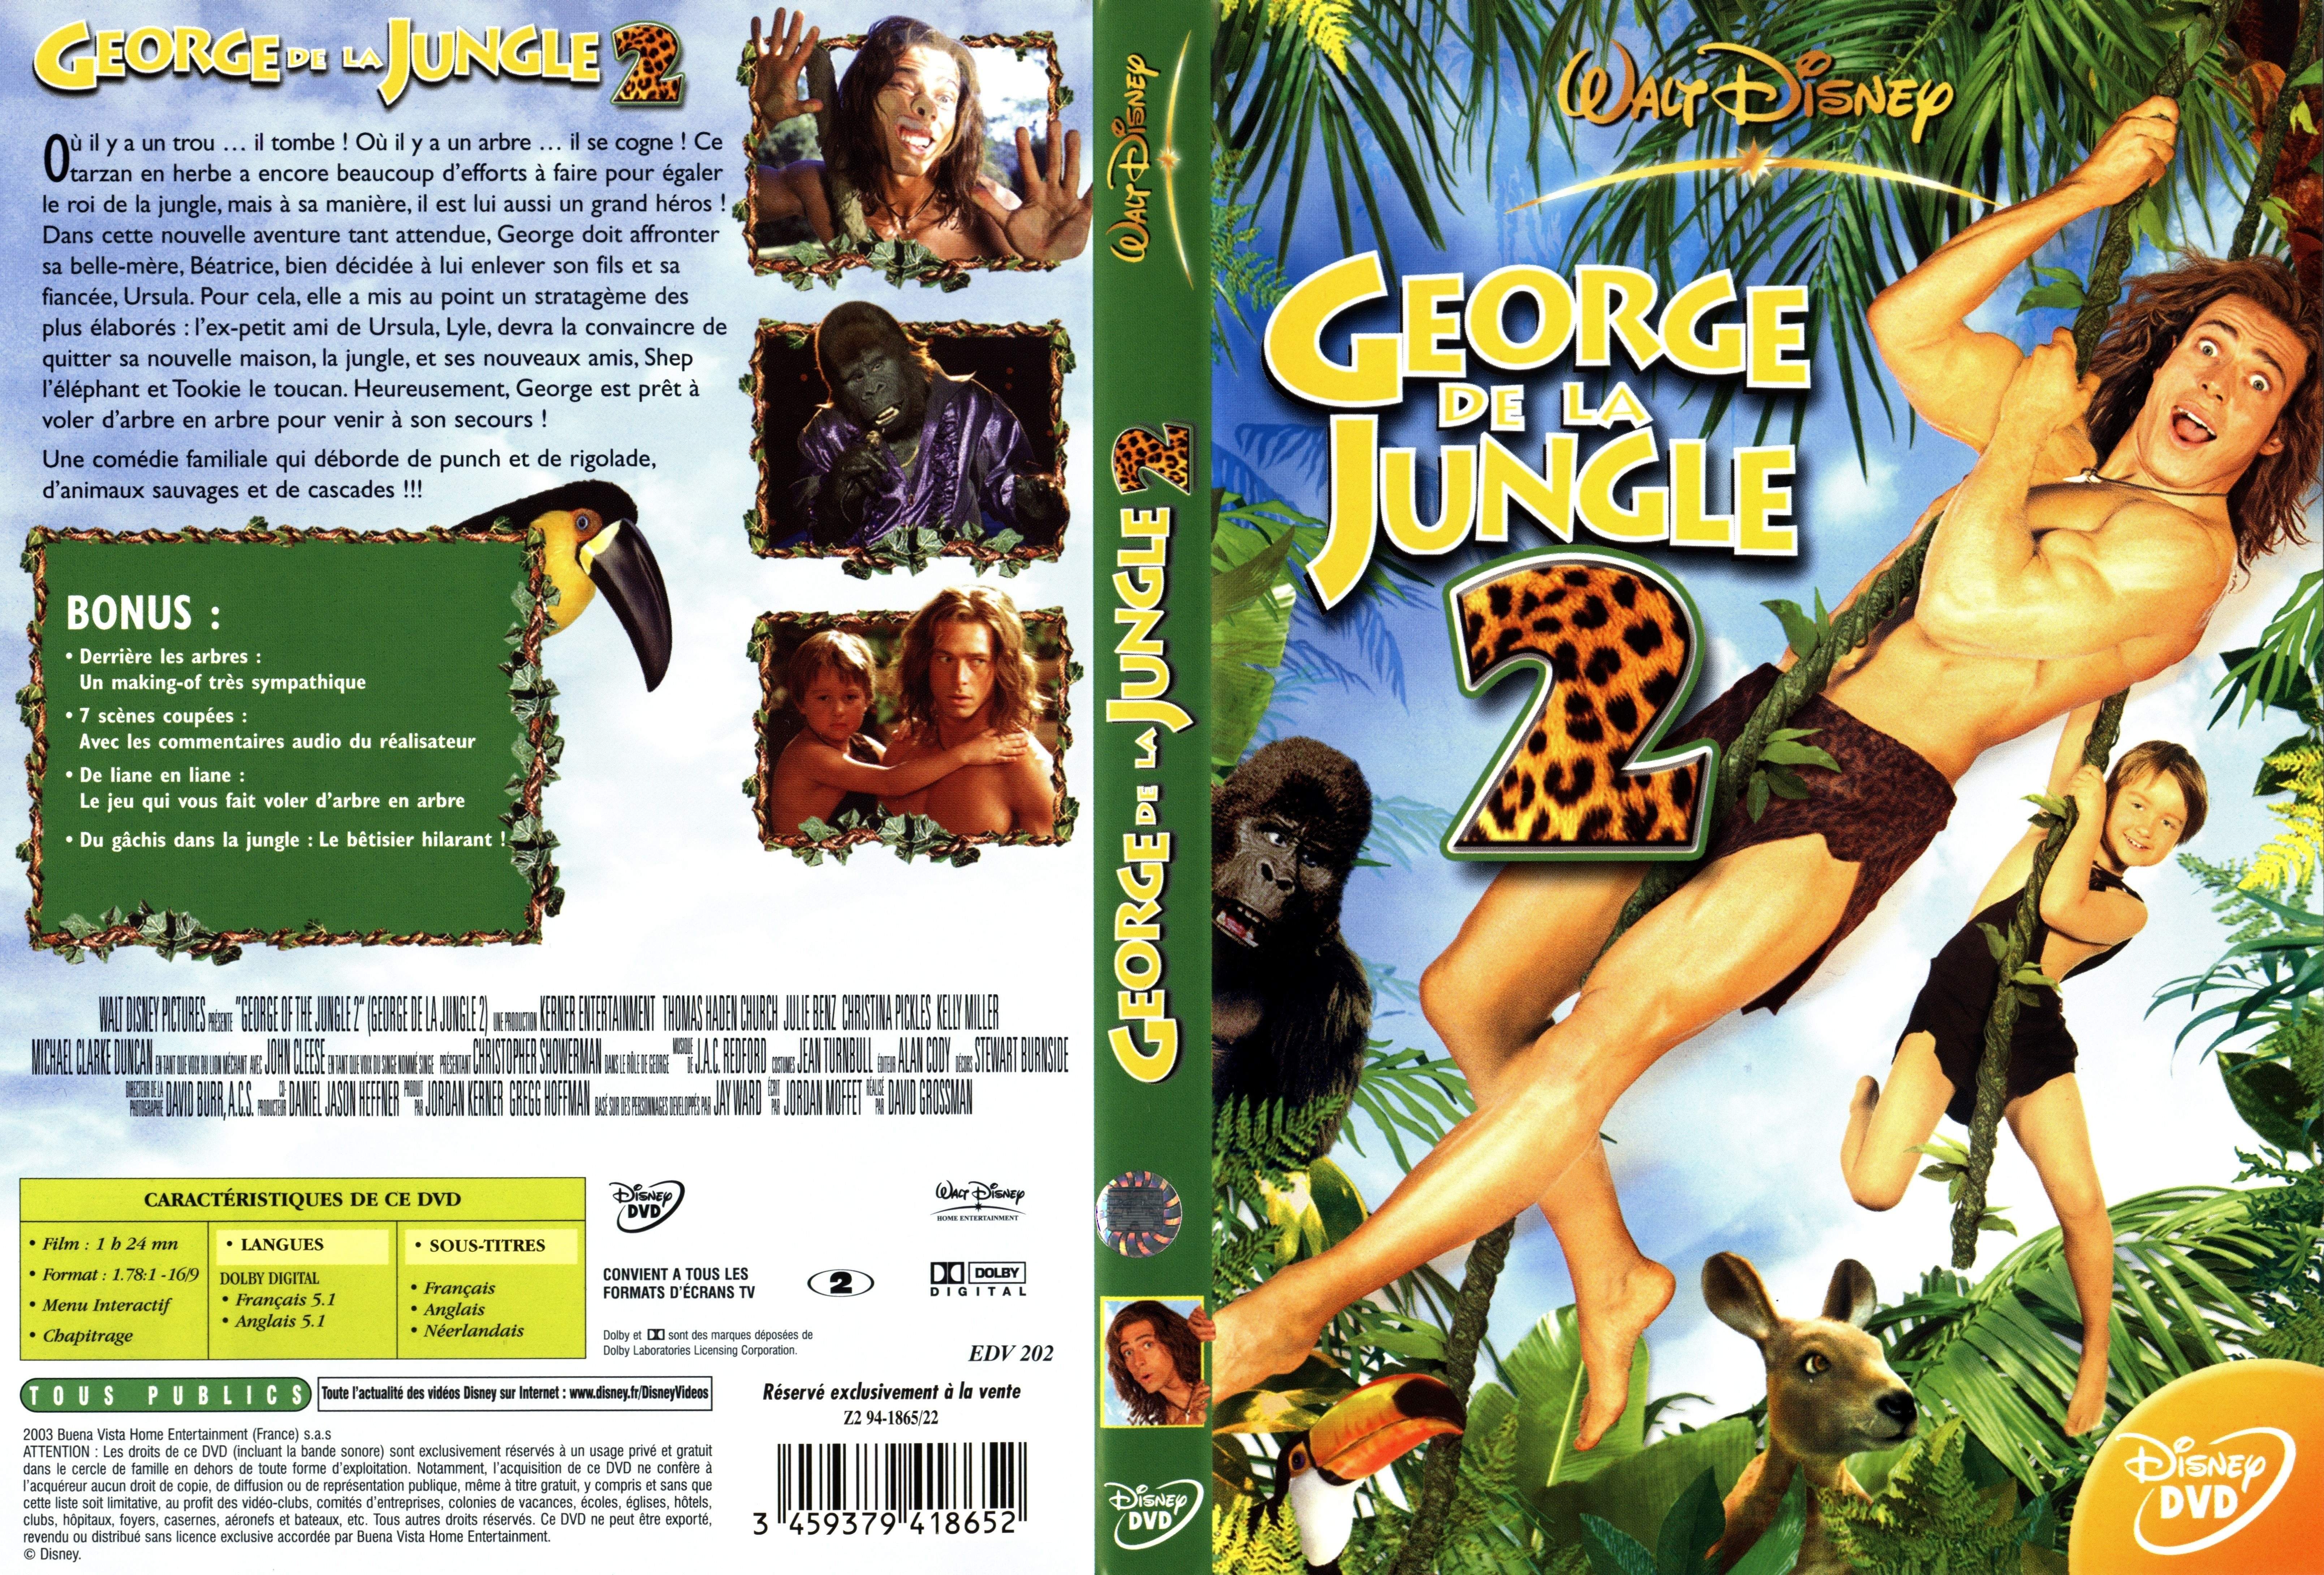 Jaquette DVD George de la jungle 2 v2